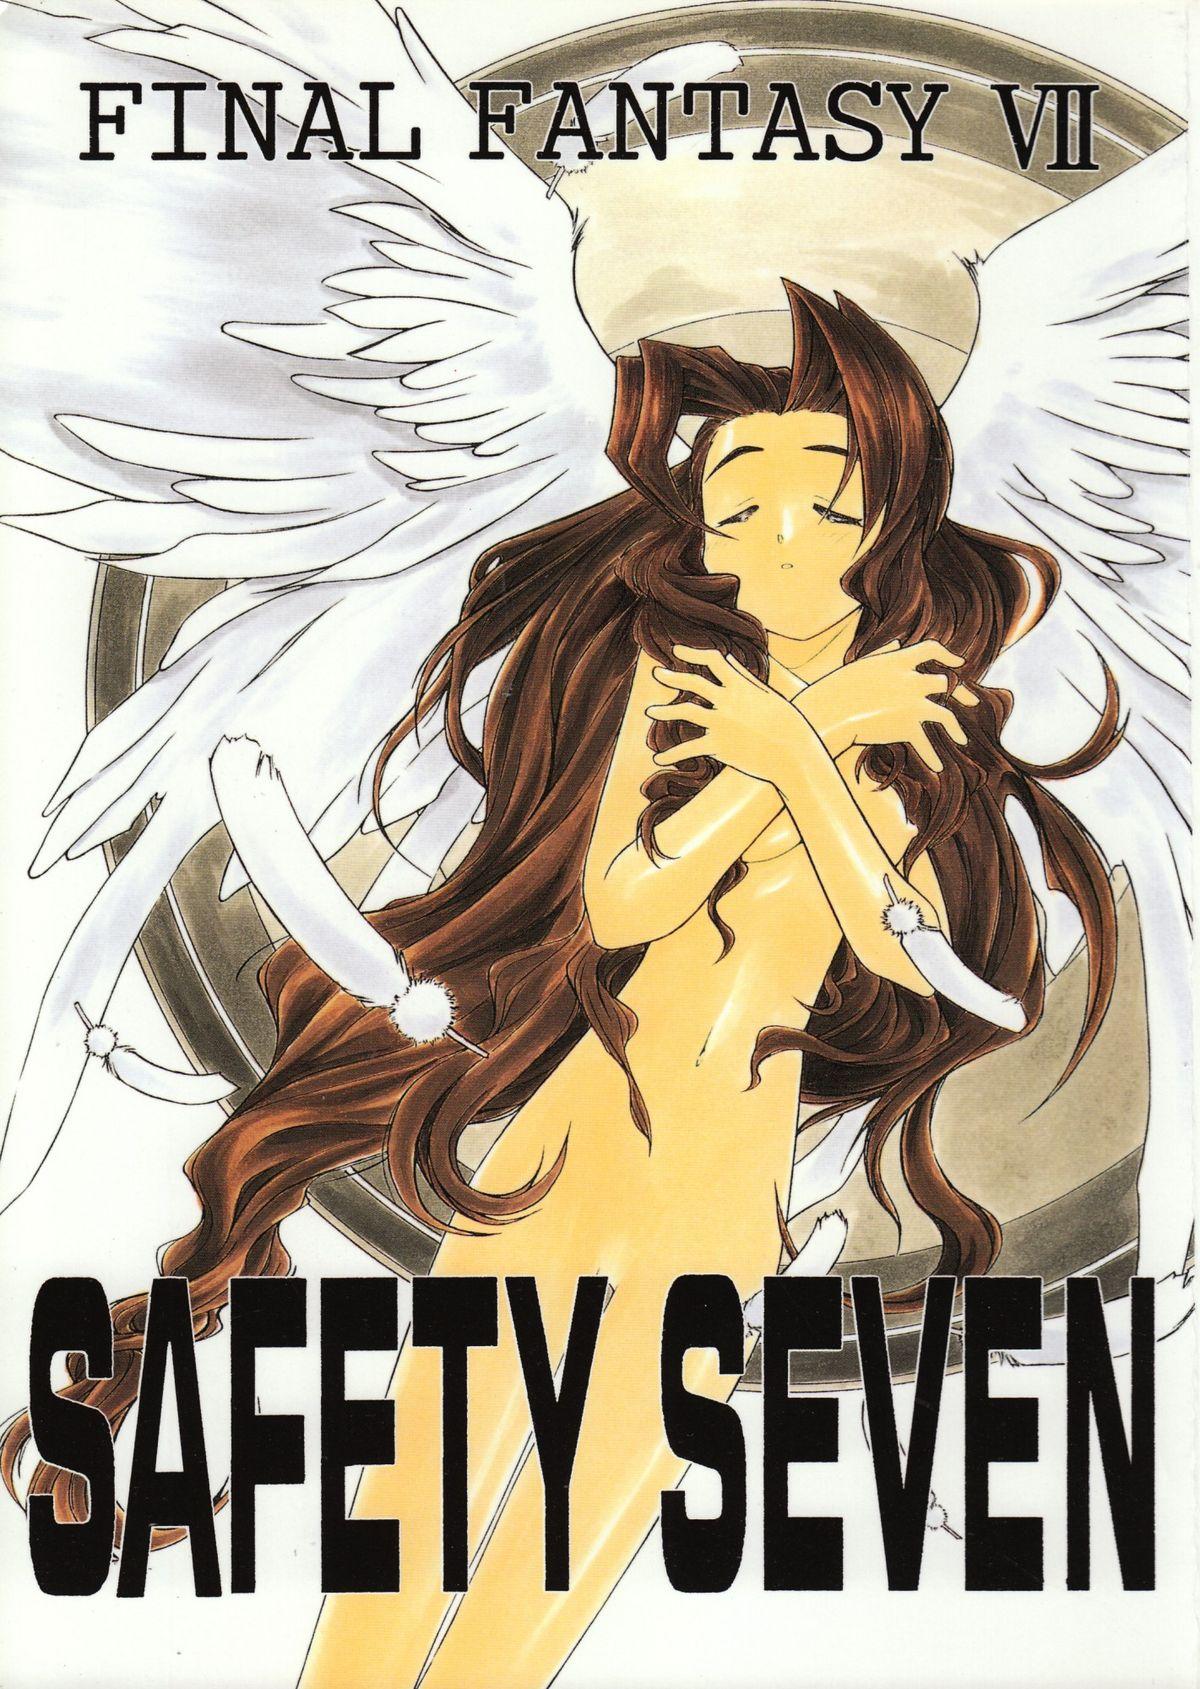 SAFETY SEVEN 0